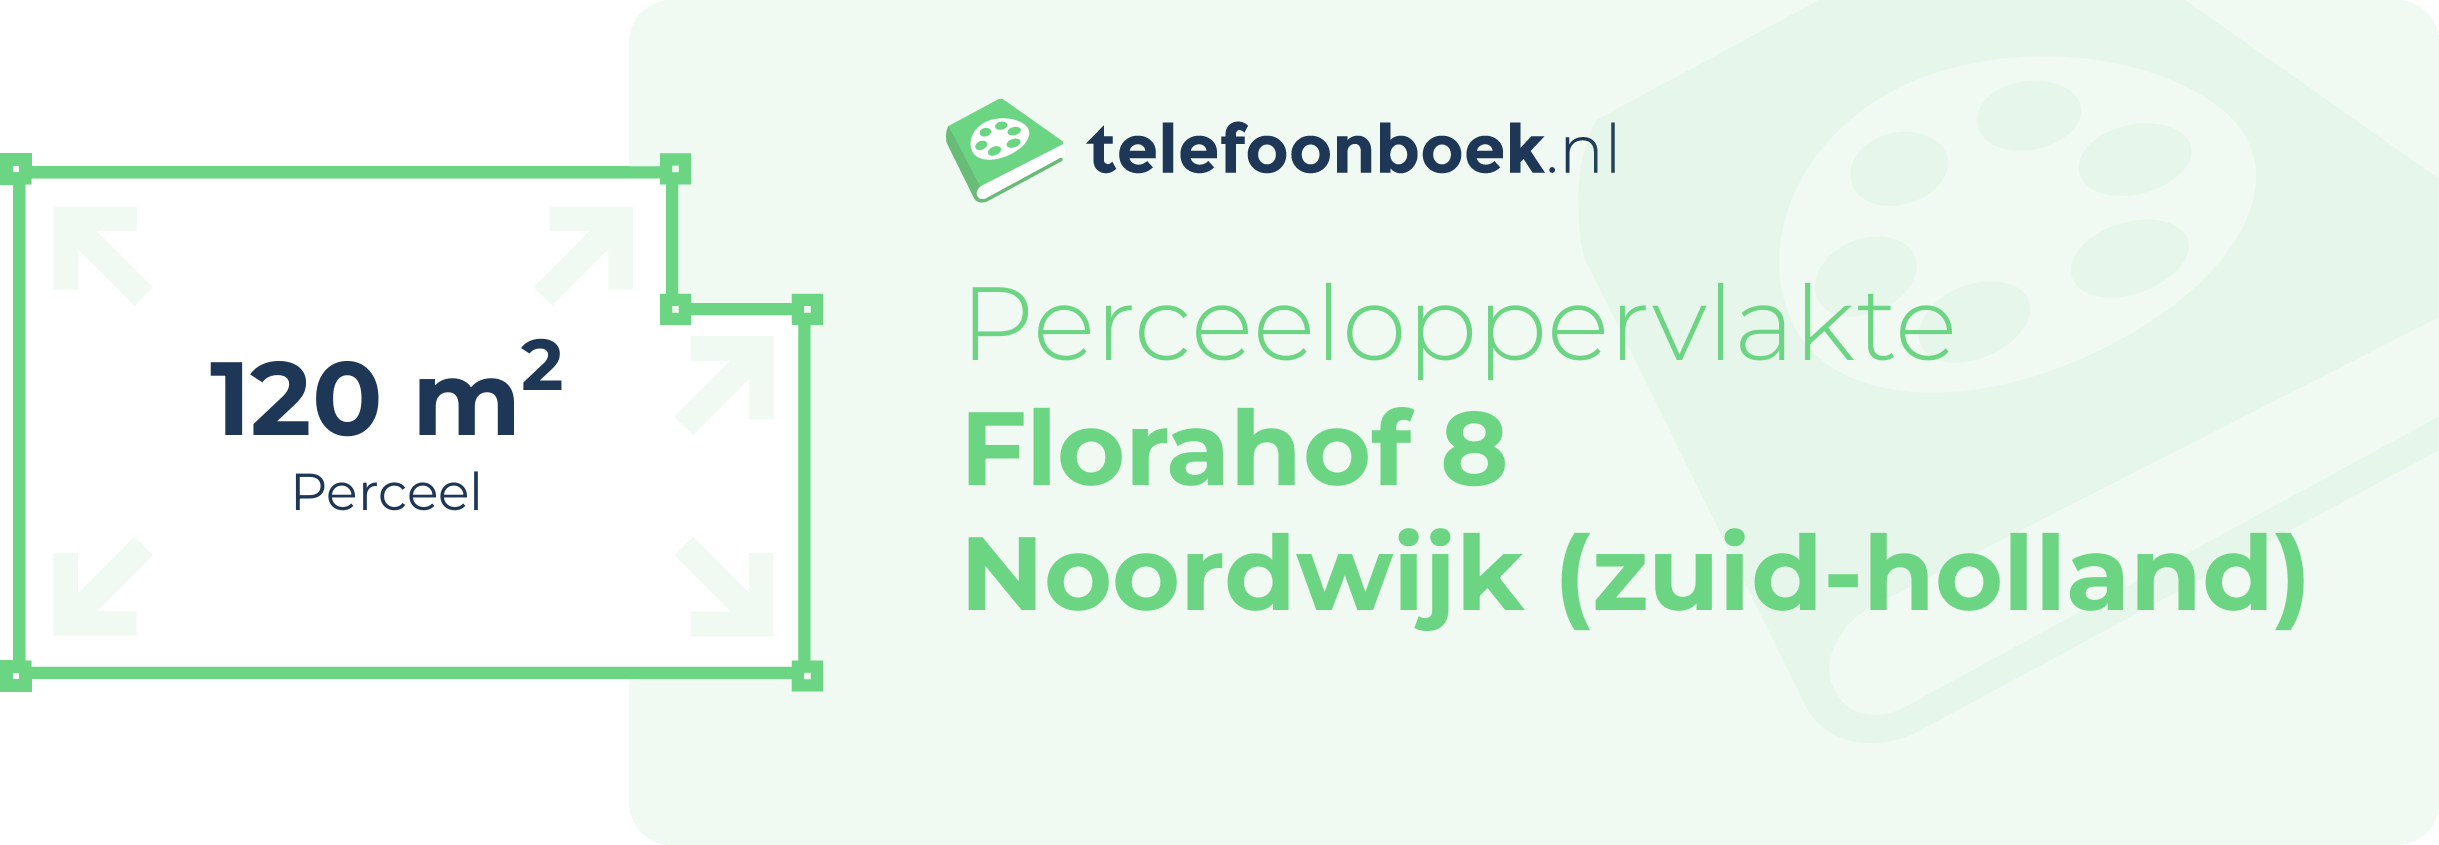 Perceeloppervlakte Florahof 8 Noordwijk (Zuid-Holland)